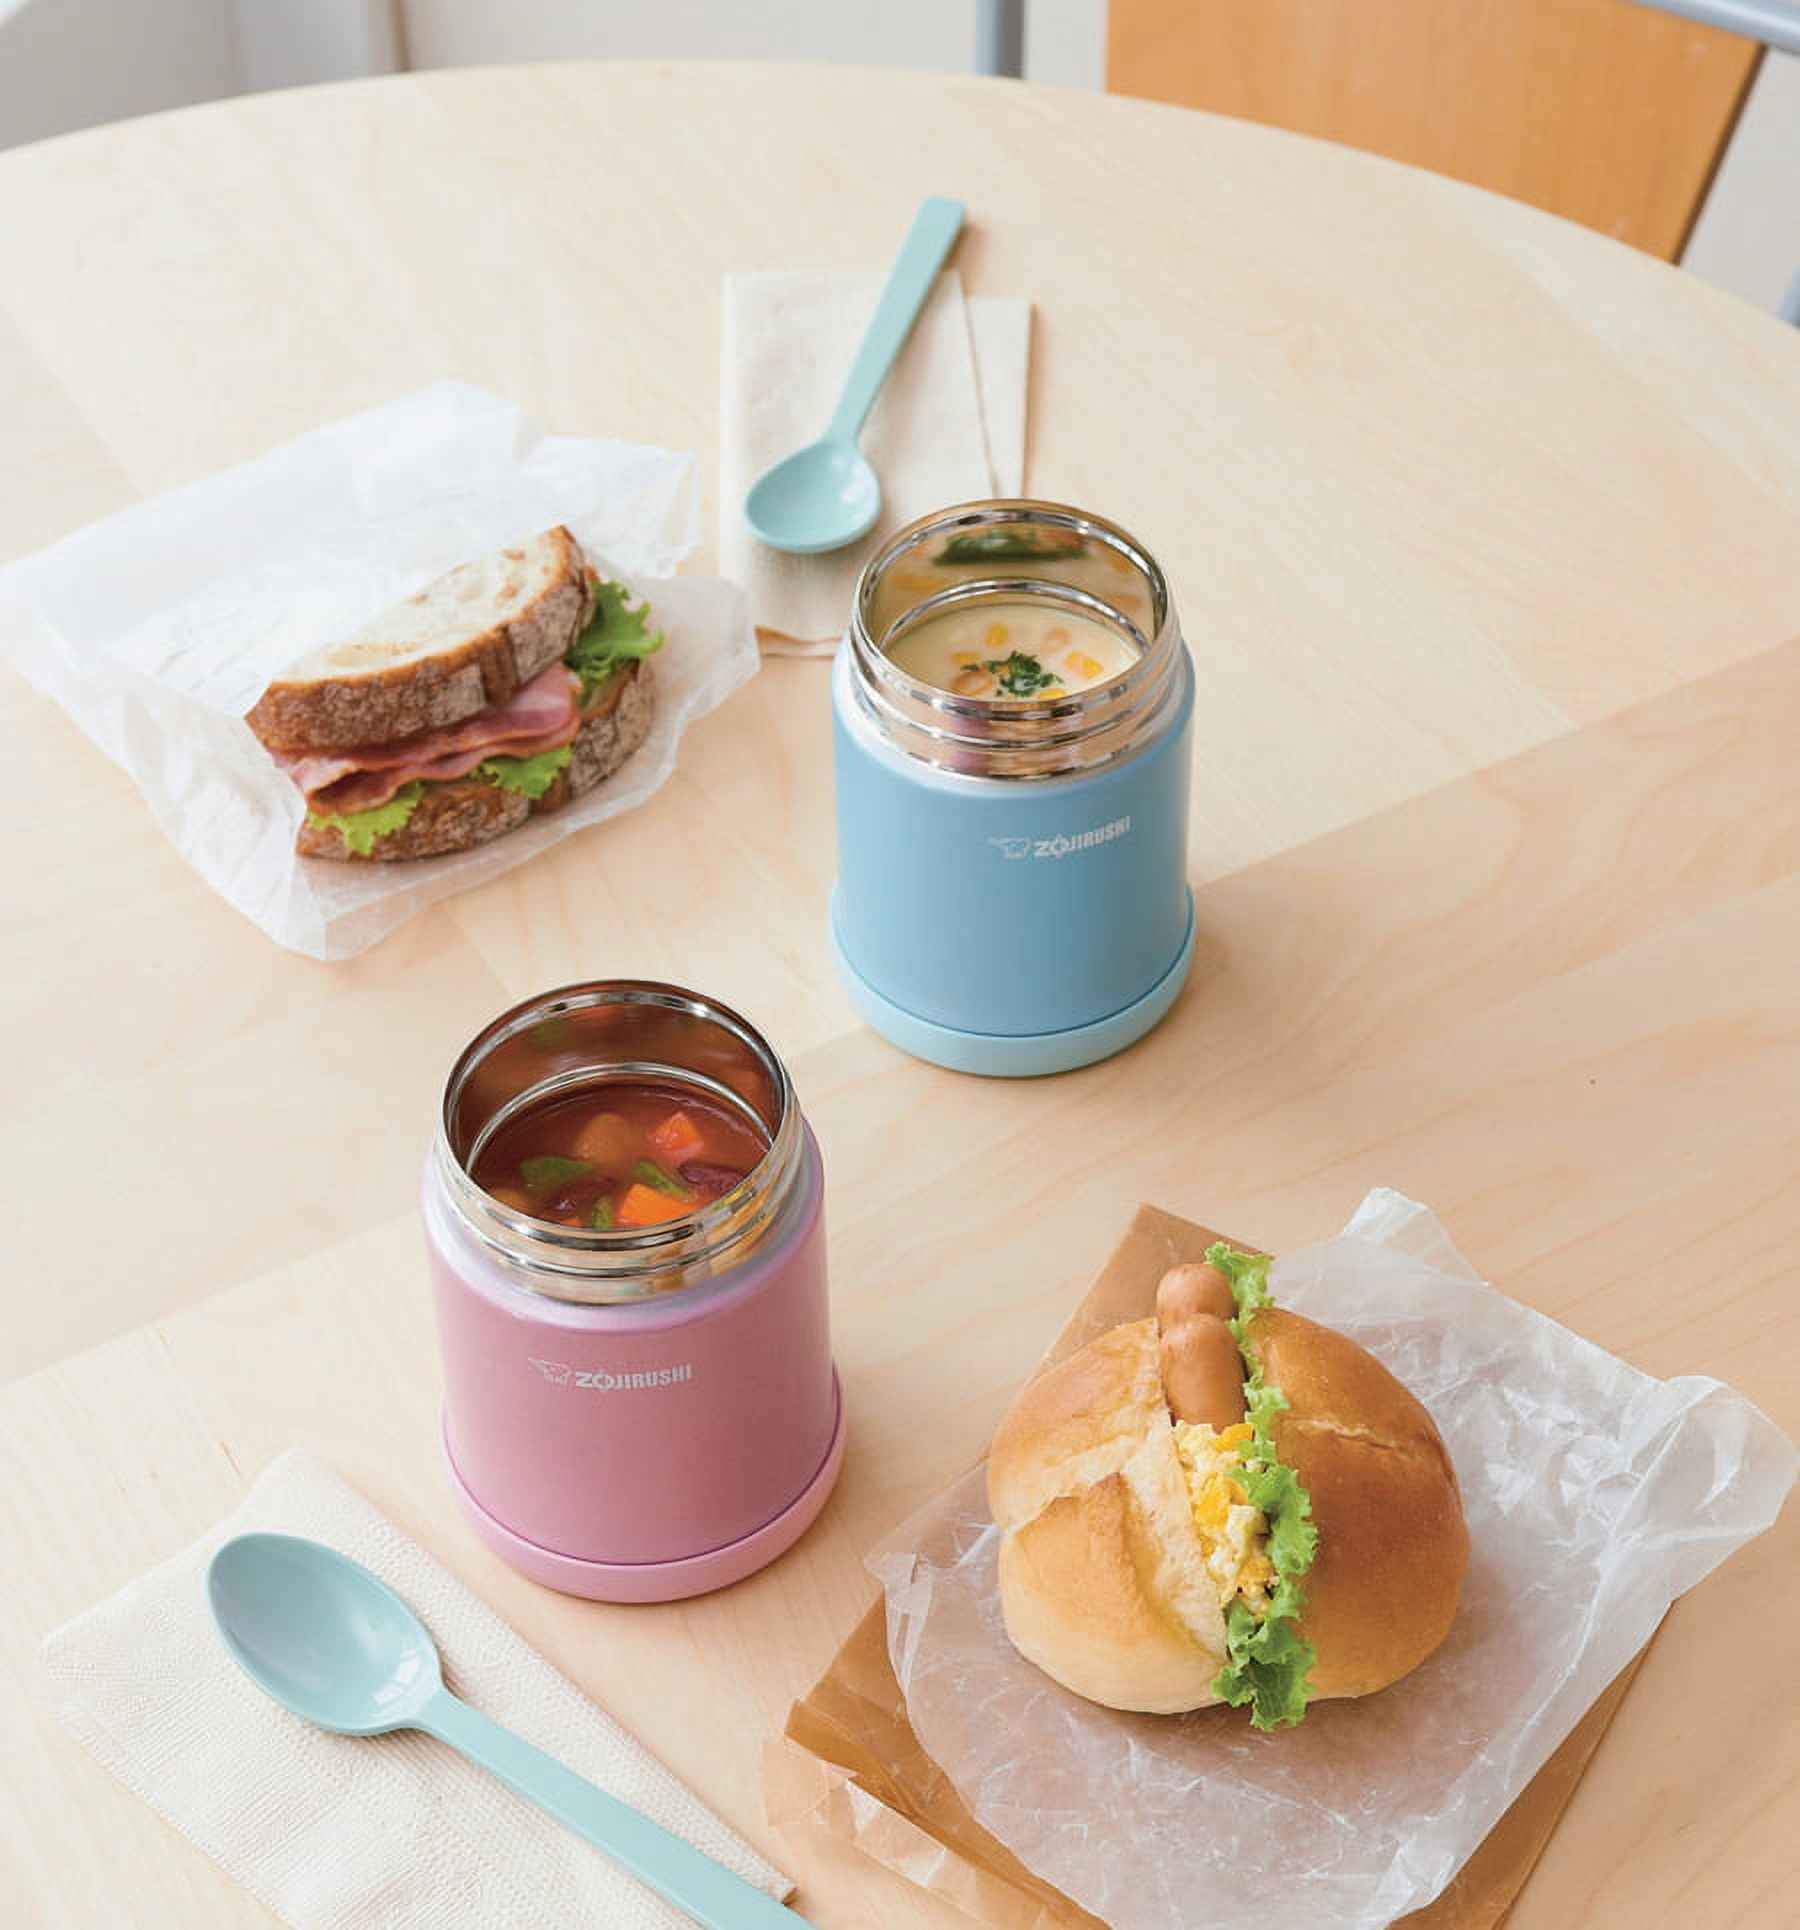 ZOJIRUSHI Zojirushi (ZOJIRUSHI) Stainless Cook & Food Jar Random Insulation  Insulated Cold Cooking Insulated Lunch Jar 750ml Tomato Red SW-JA75-RV 